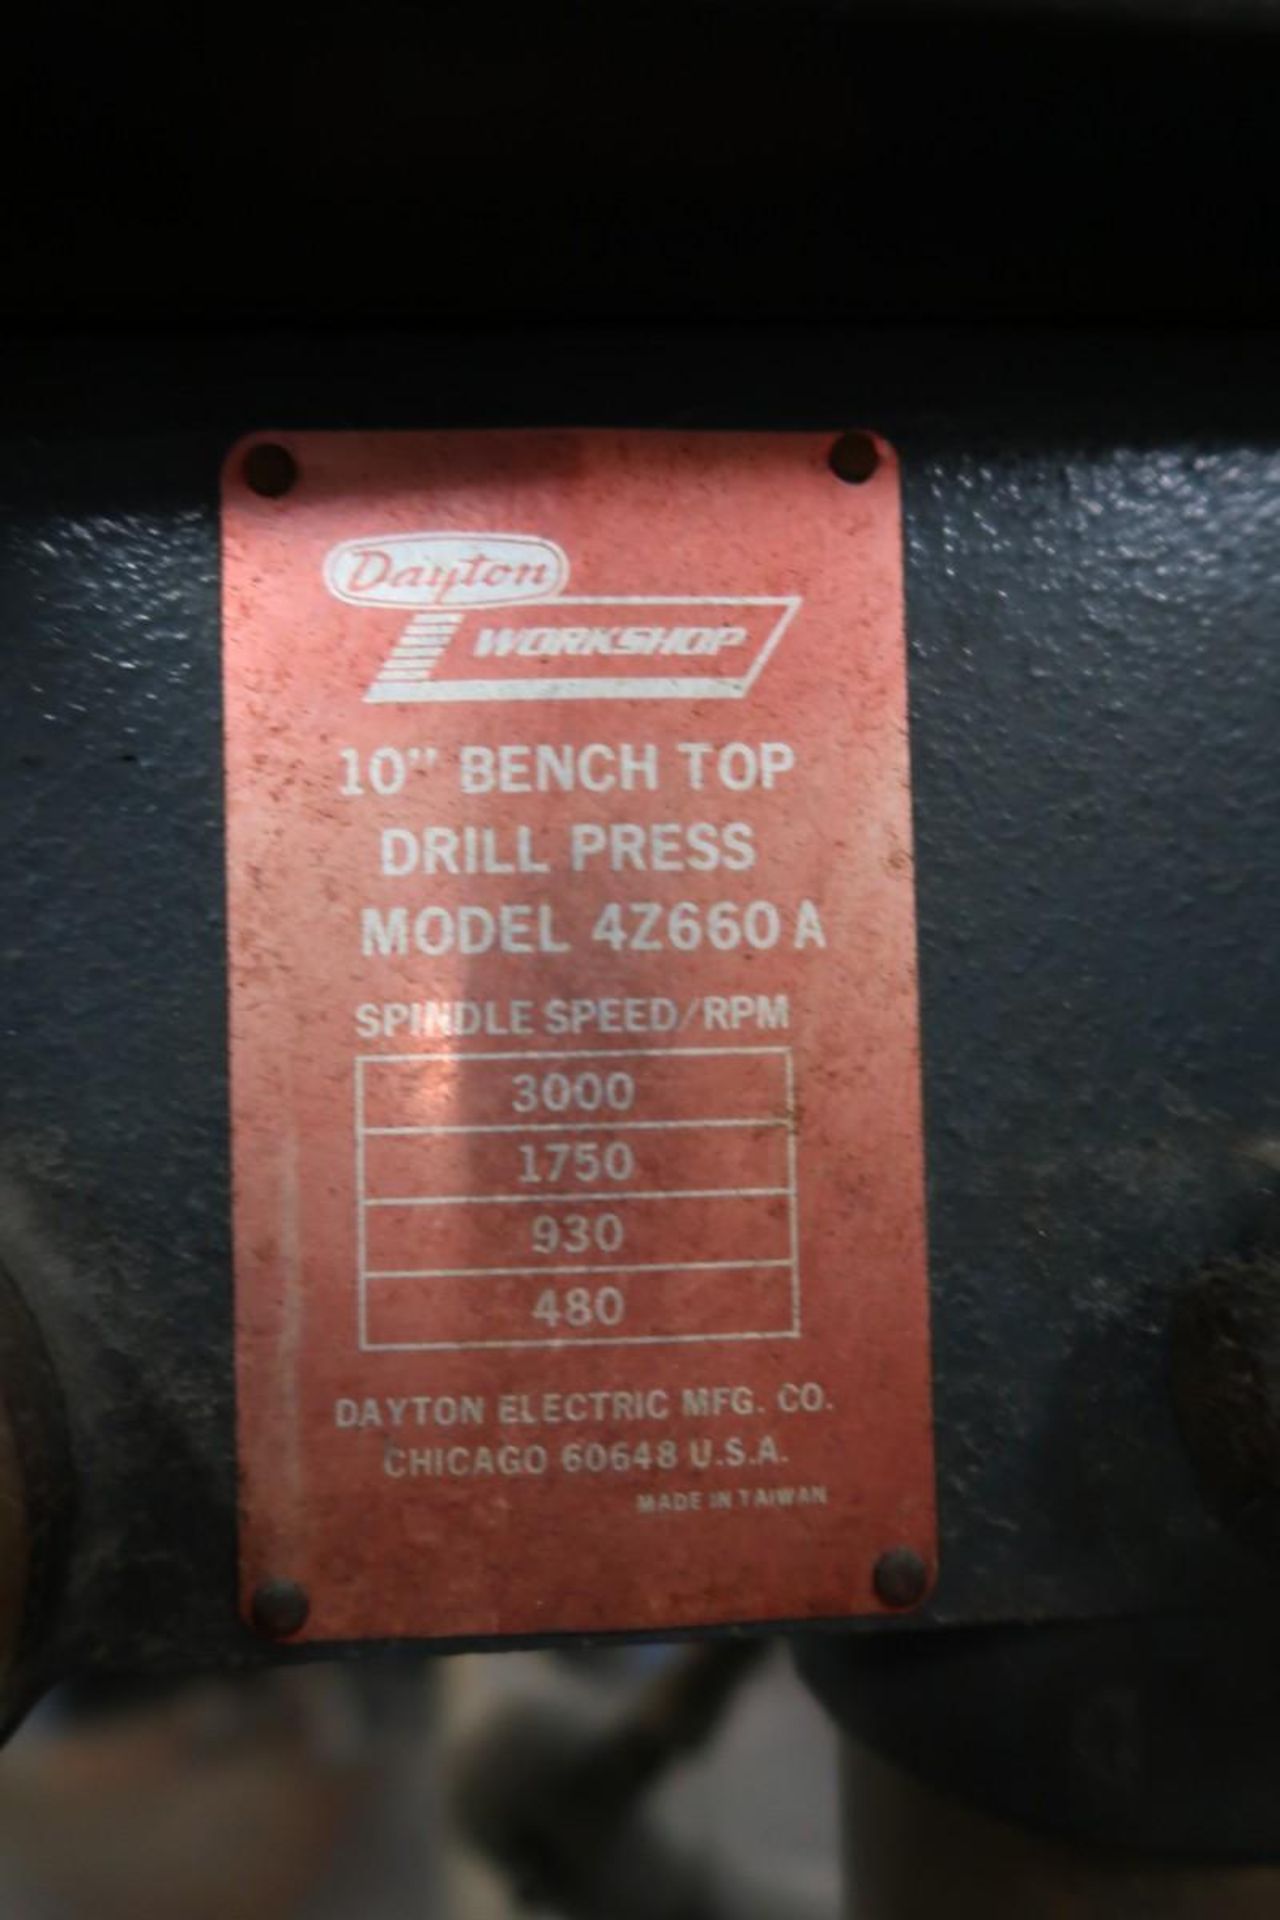 Dayton 4Z660A 10" Benchtop Drill Press - Image 3 of 3